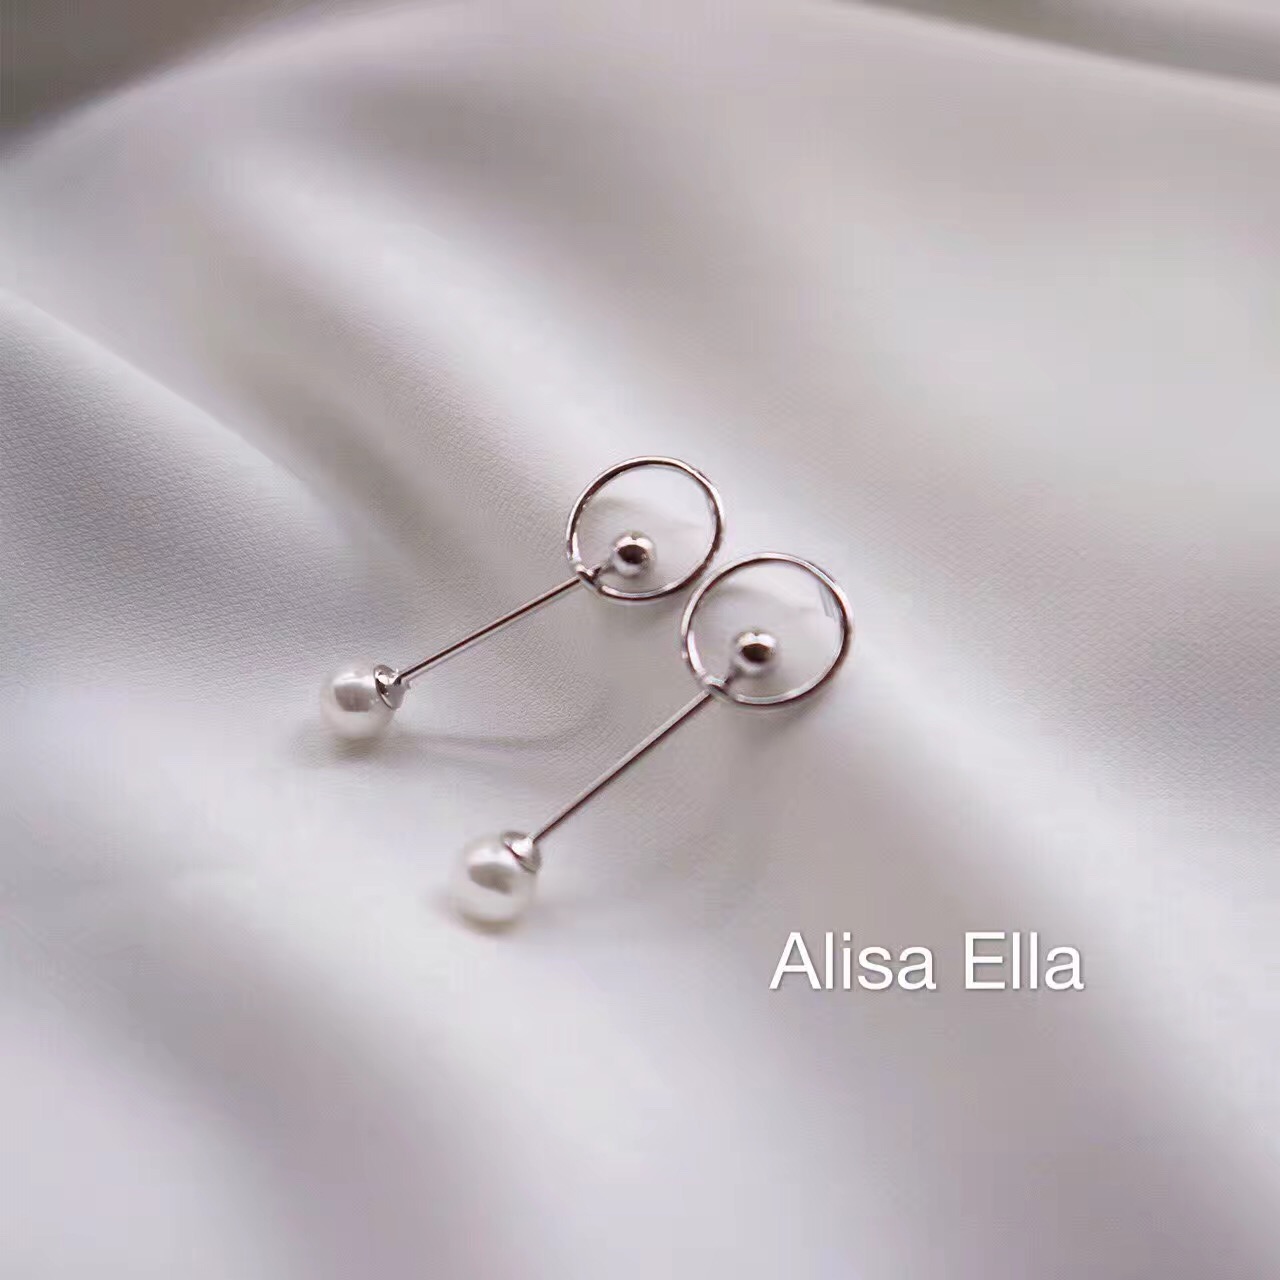 Alisa Ella